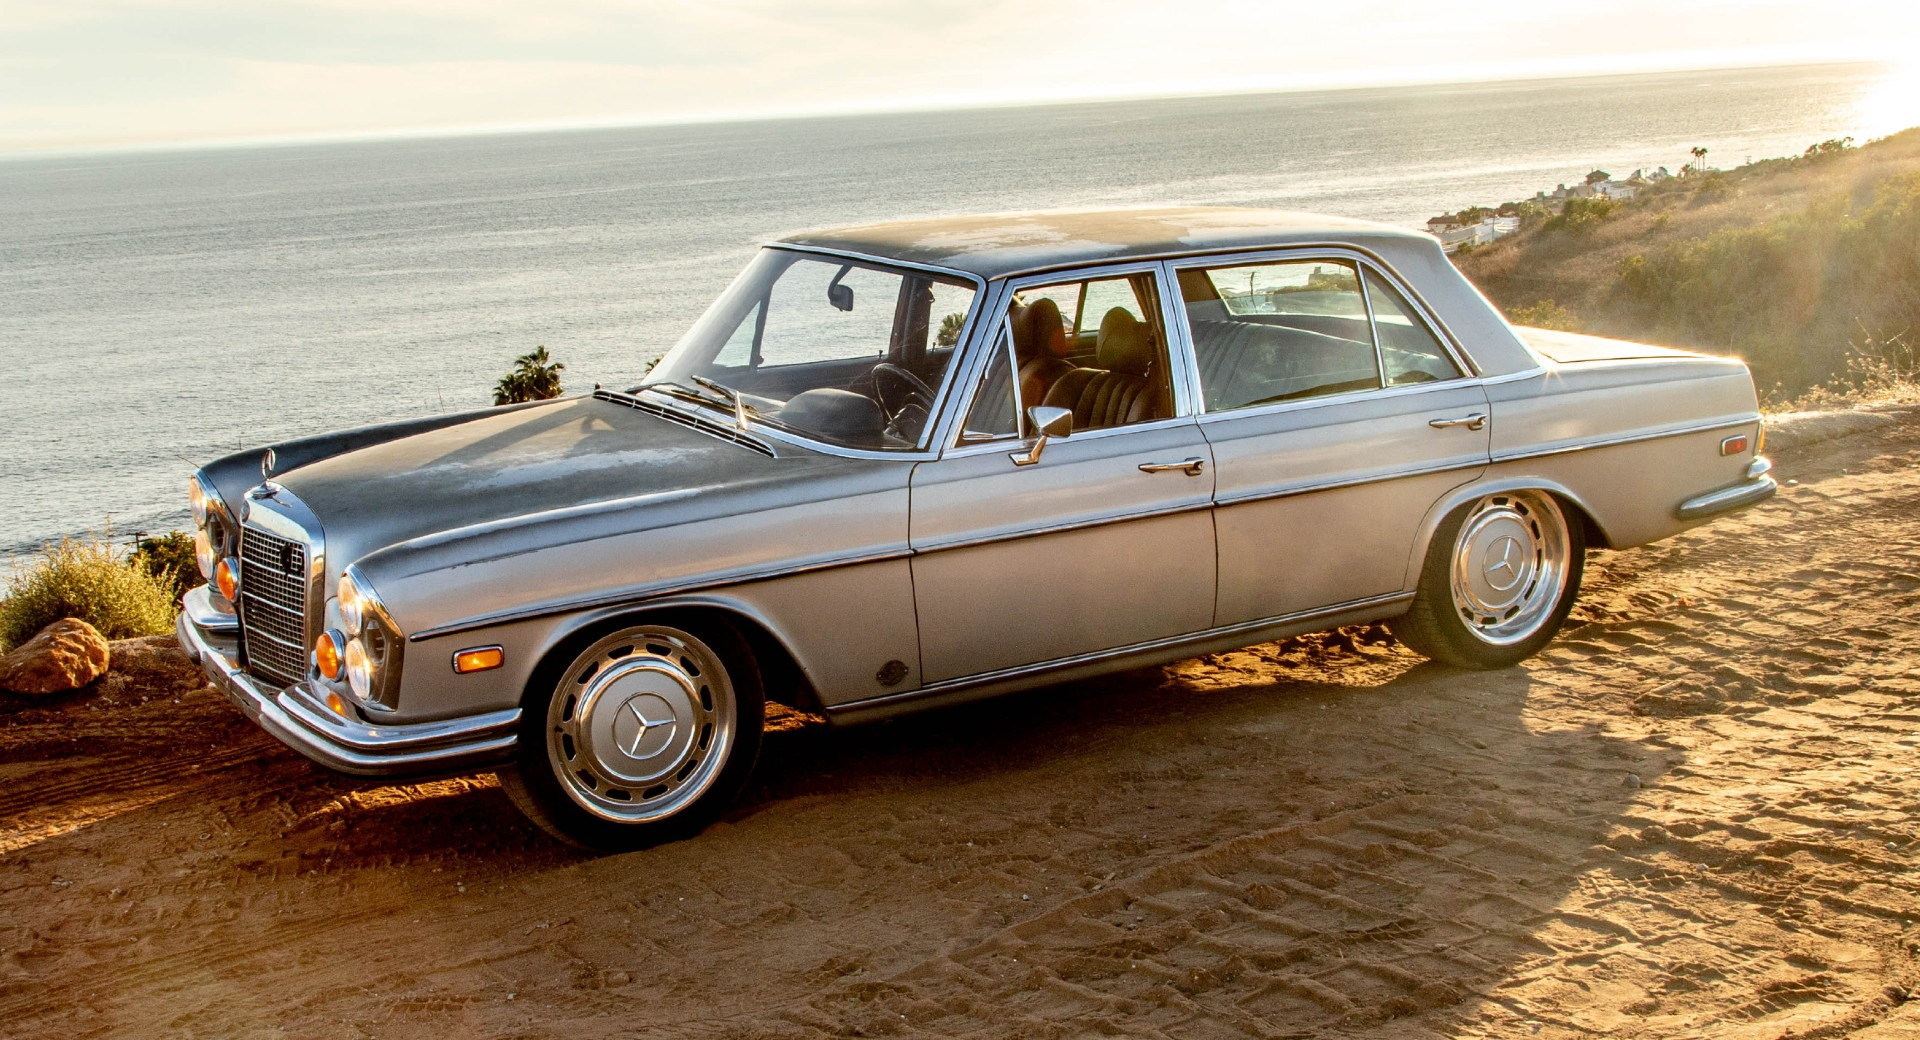 Icon 44 оснастил классический Mercedes-Benz американским V8